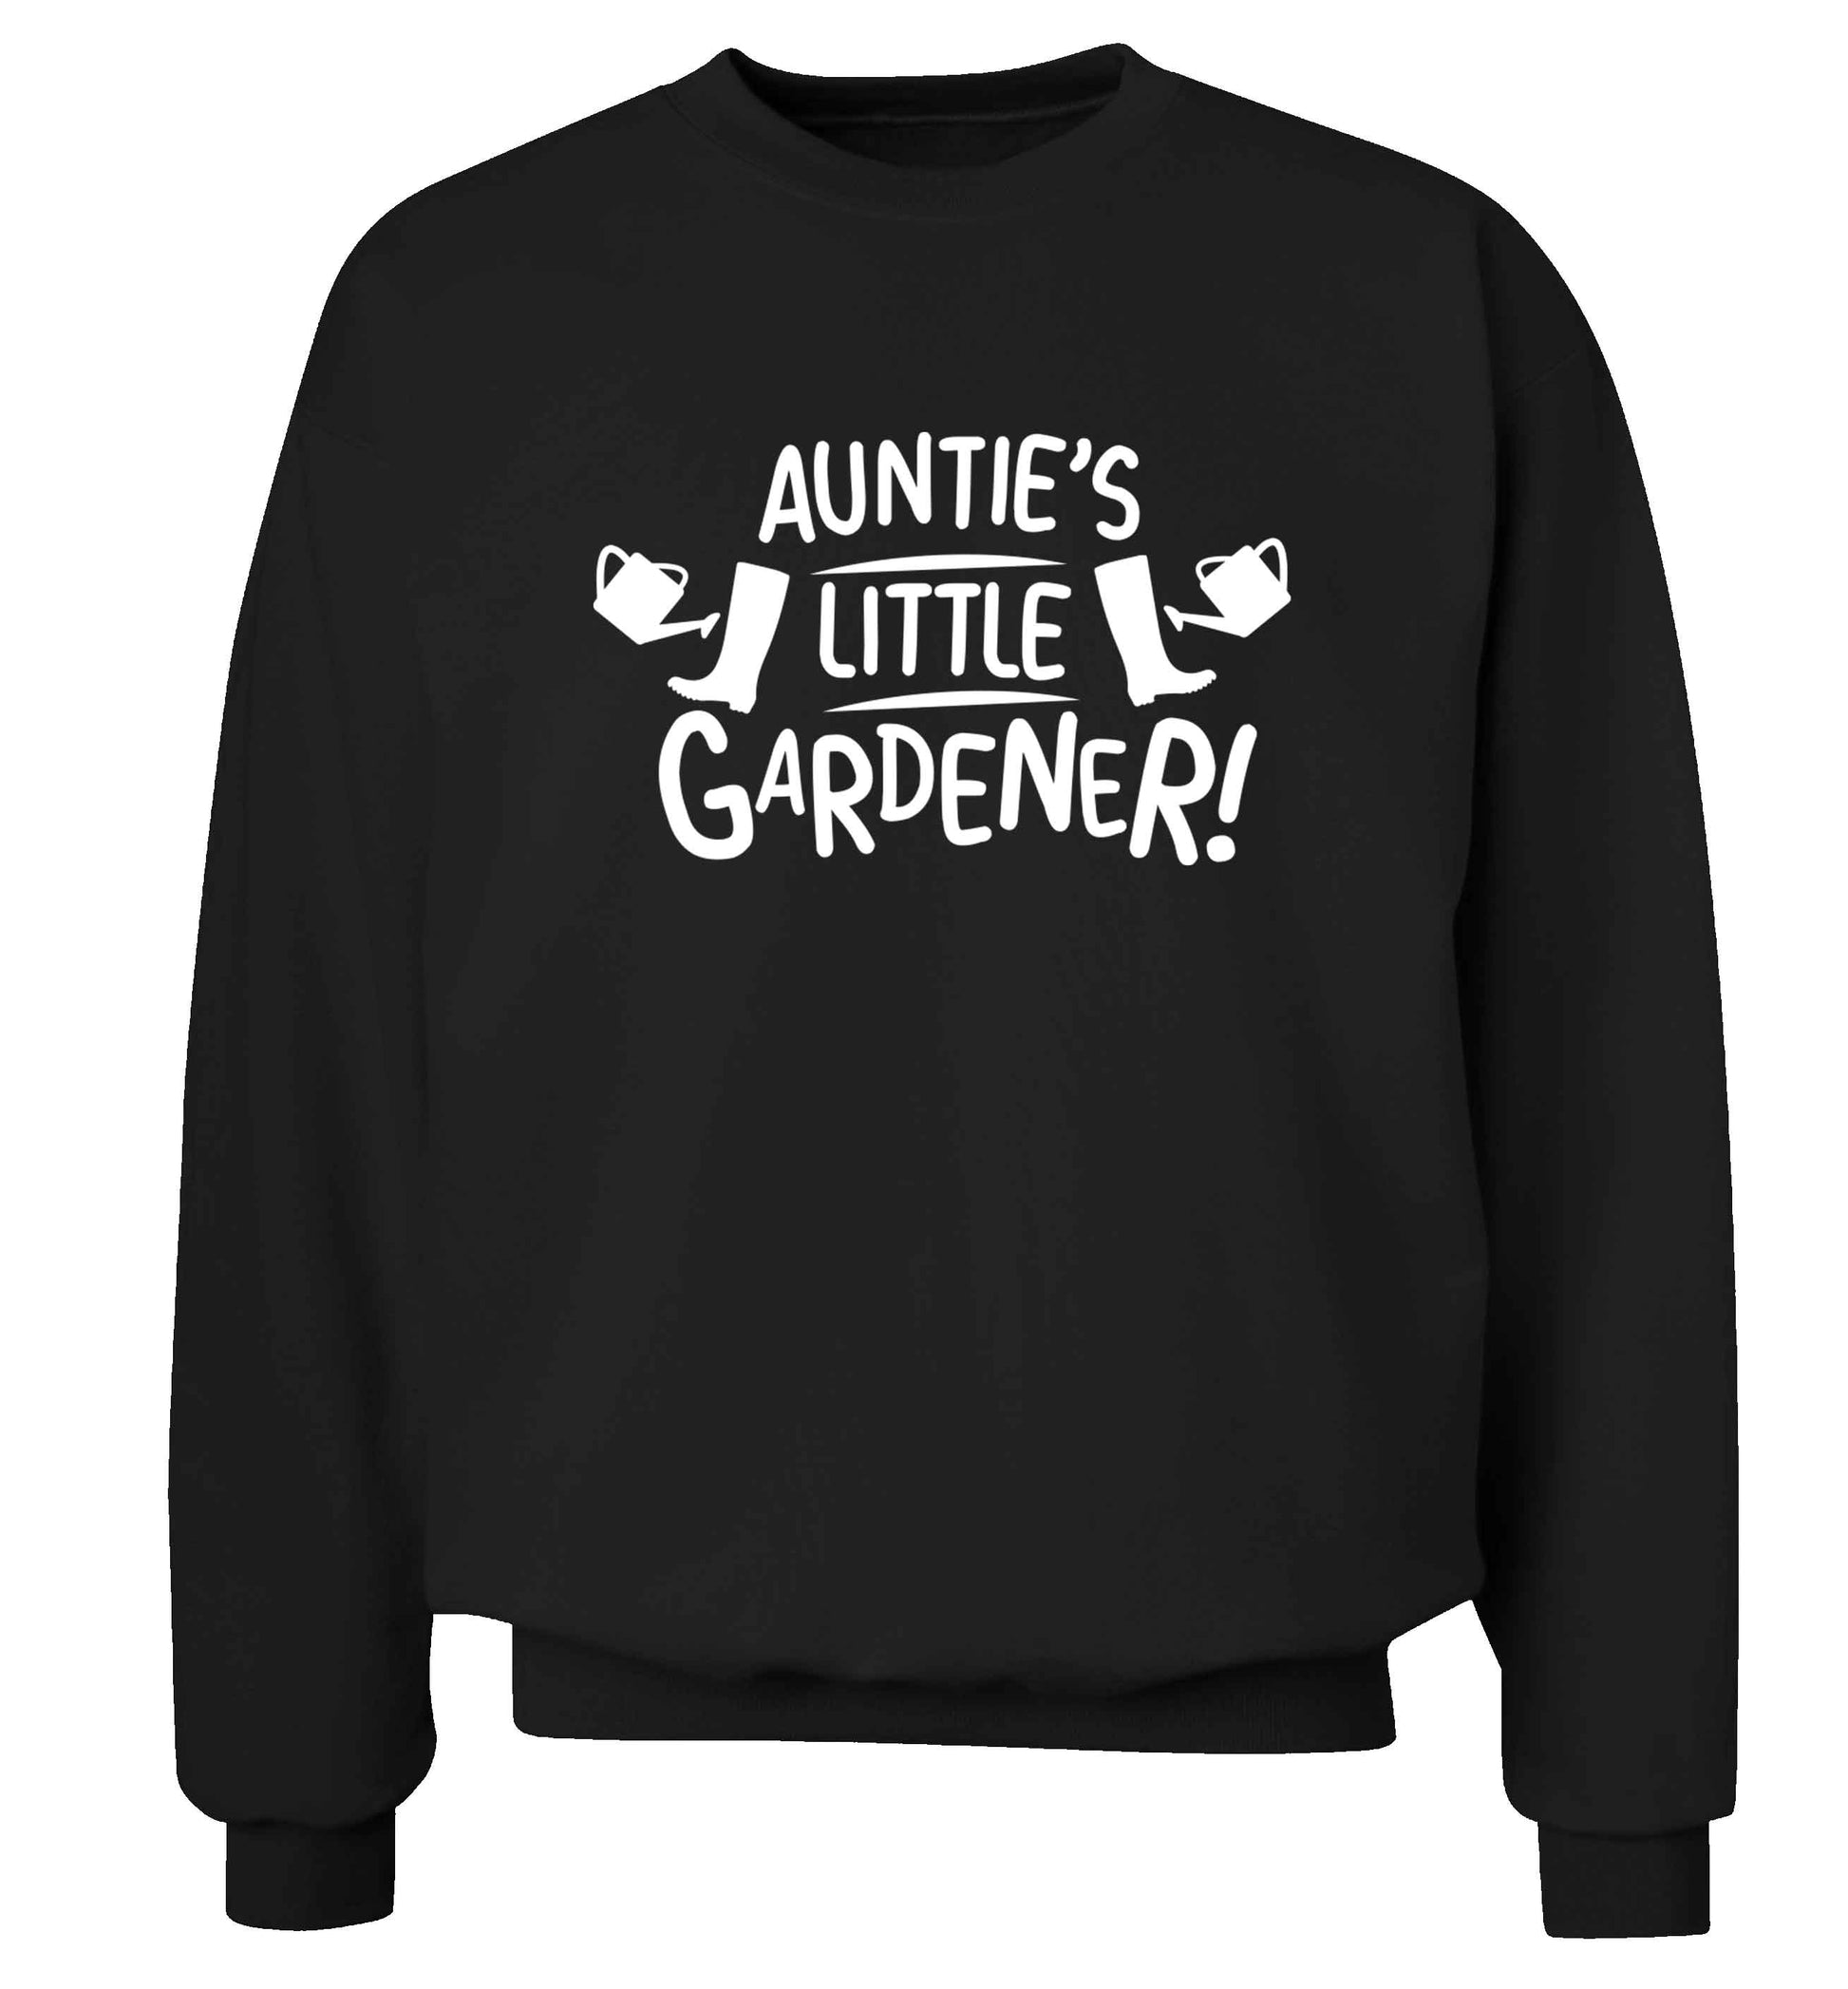 Auntie's little gardener Adult's unisex black Sweater 2XL